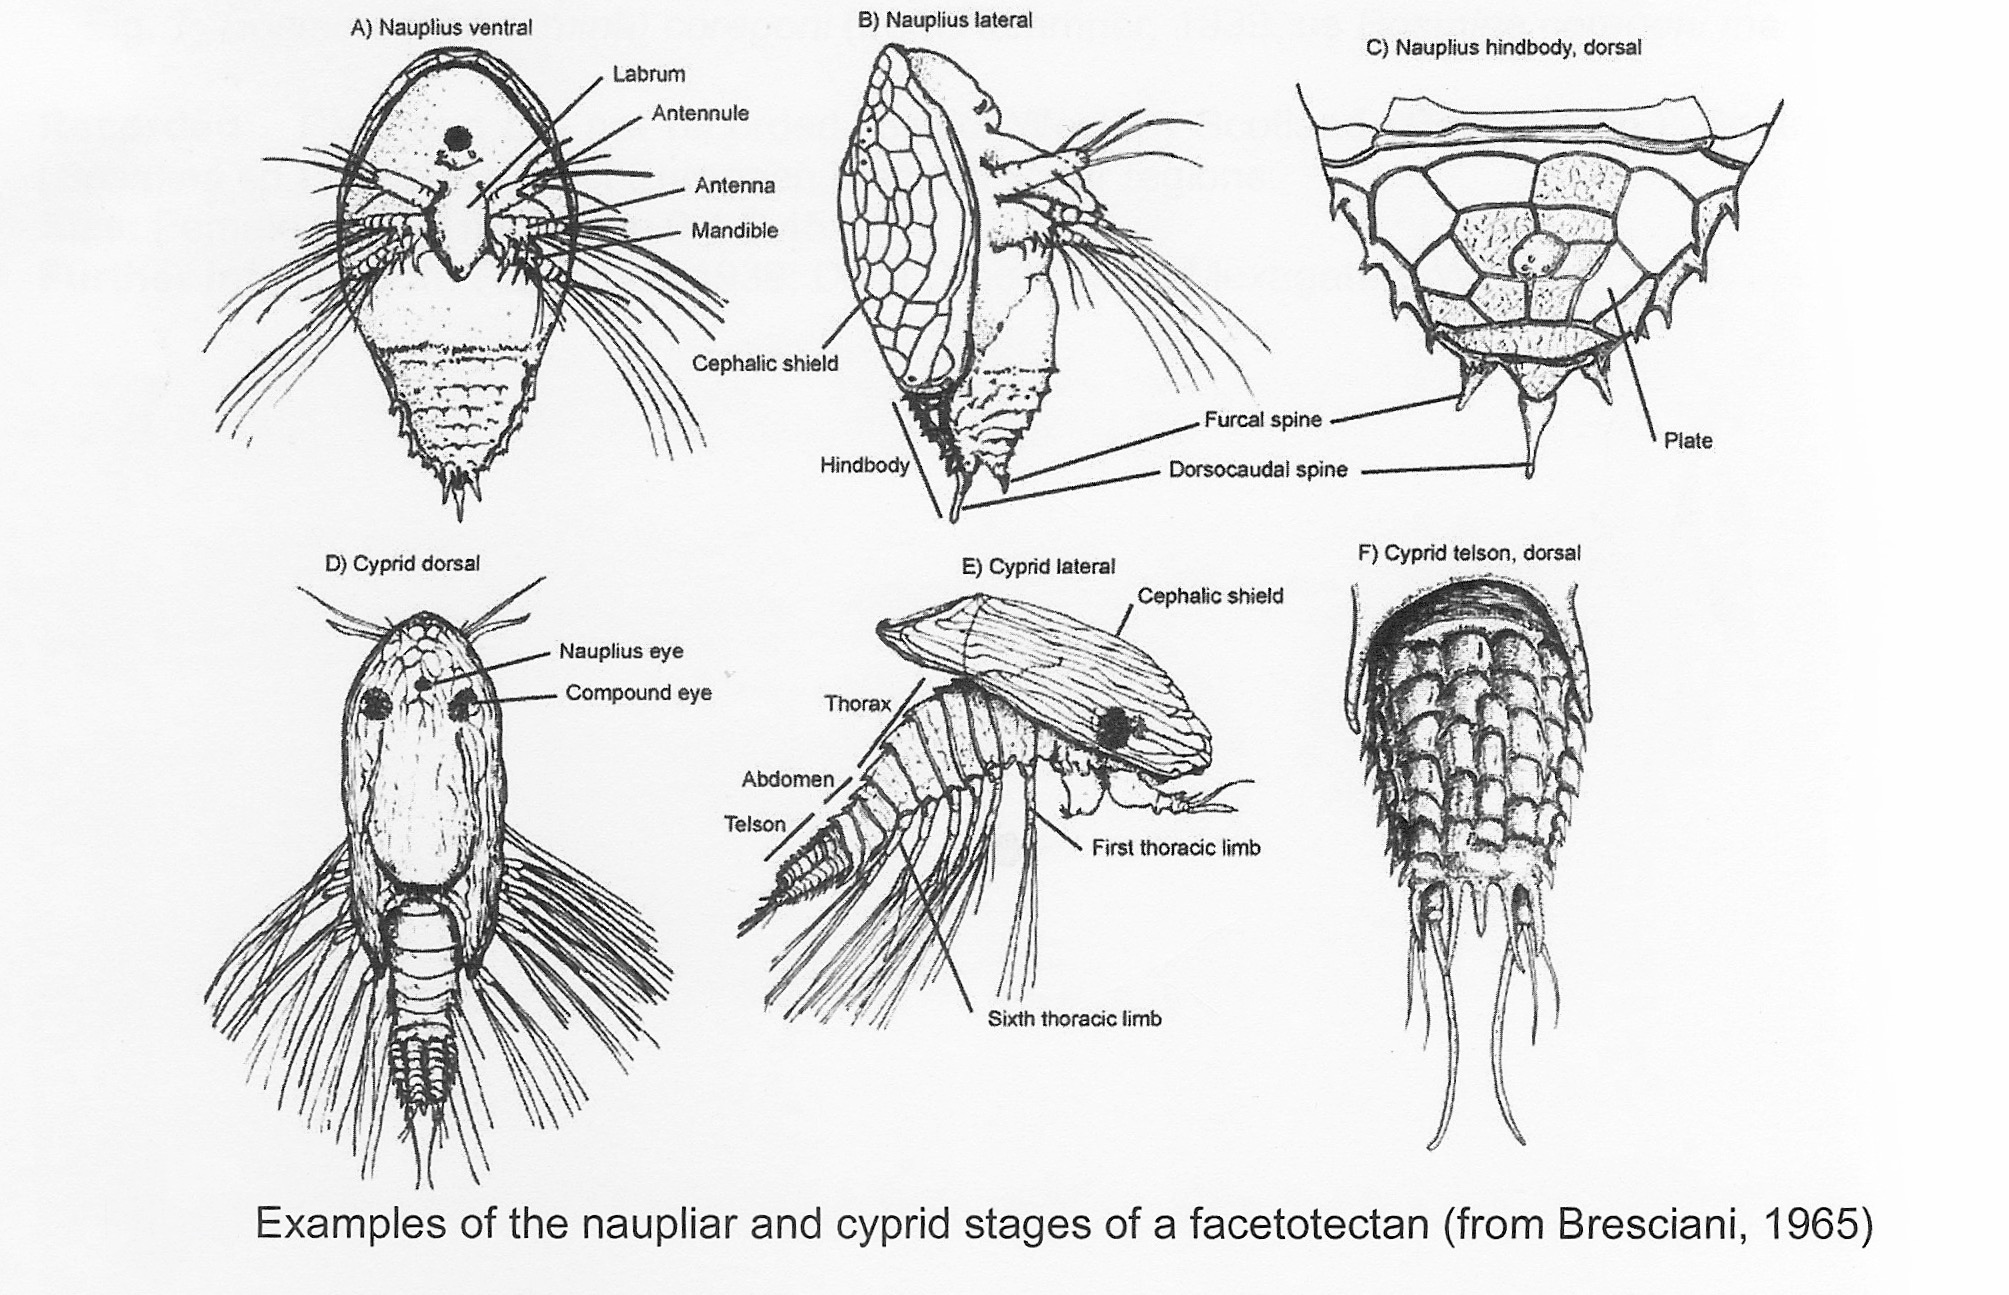 Facetotecta larvae